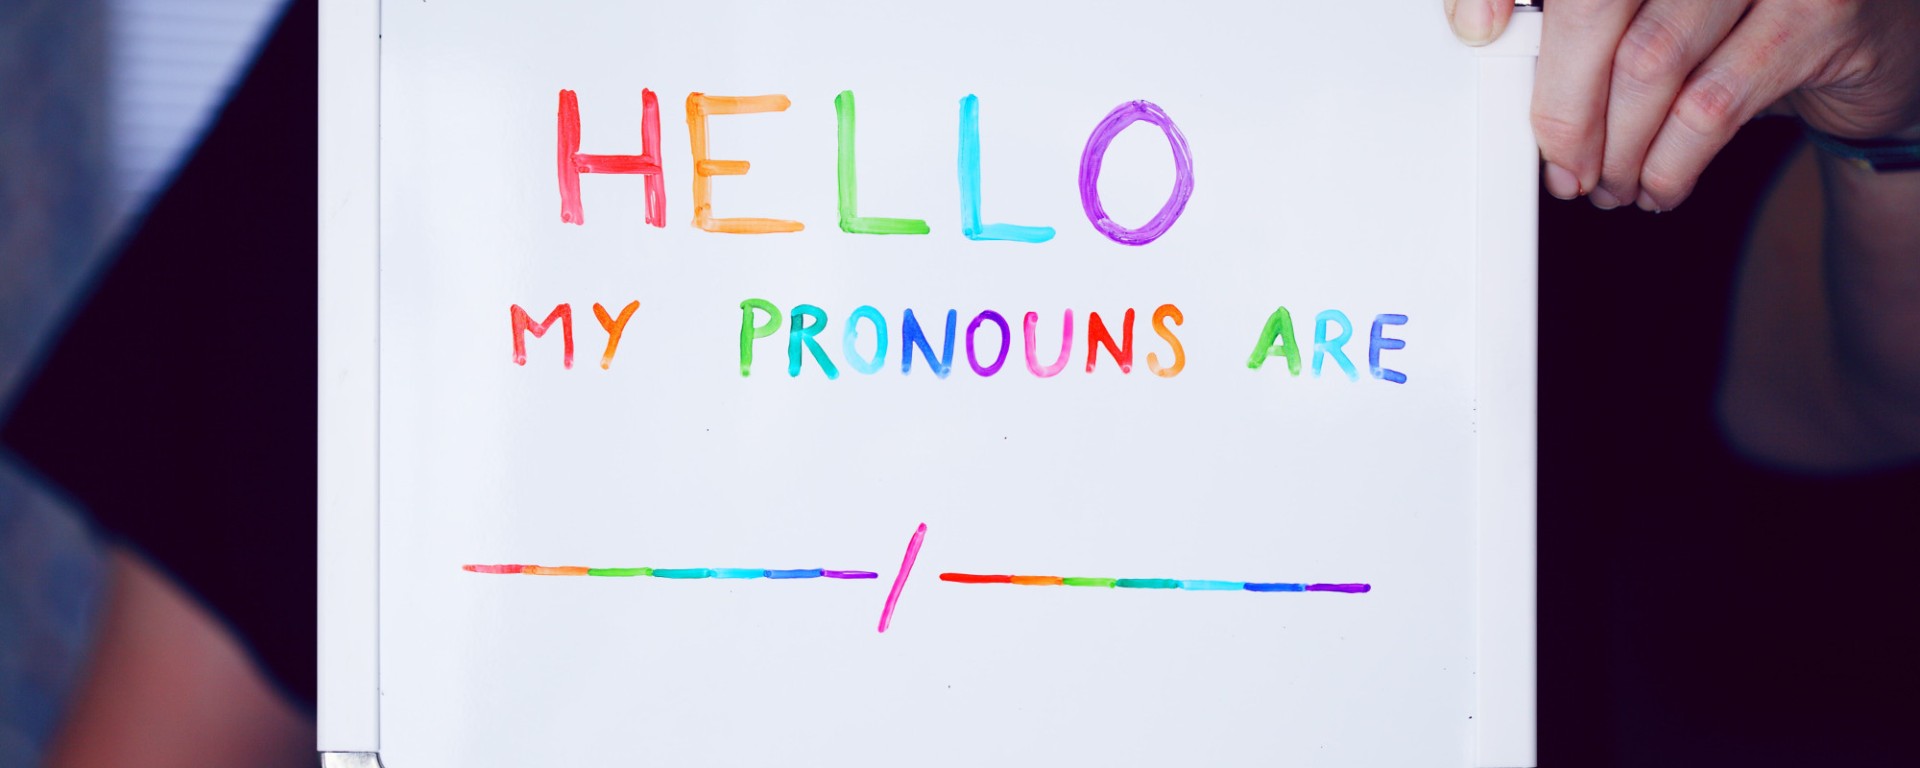 Pronouns. Image: Sharon McCutcheon via Unsplash